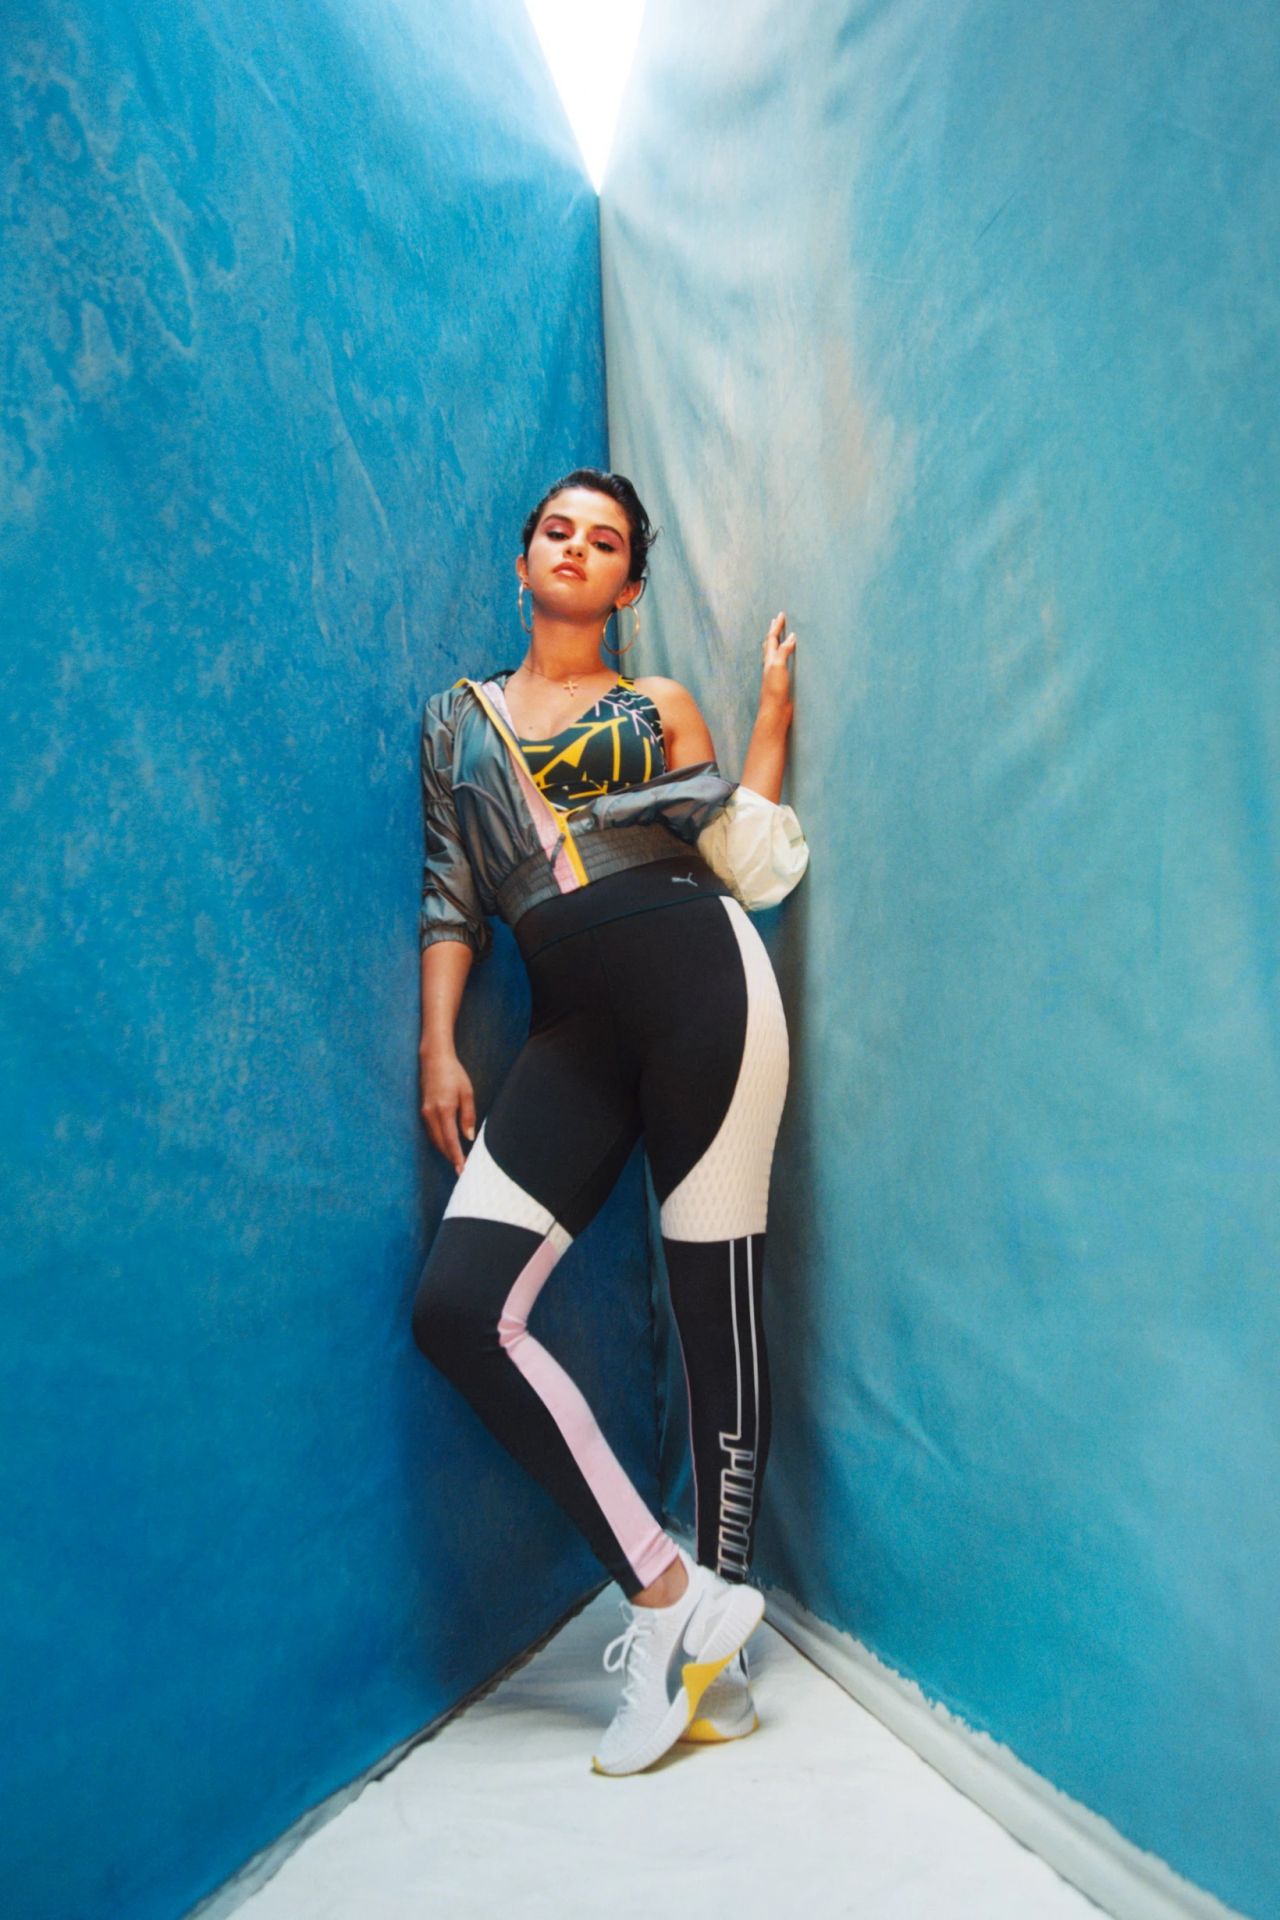 Selena Gomez 2019 Puma Photoshoot Wallpapers